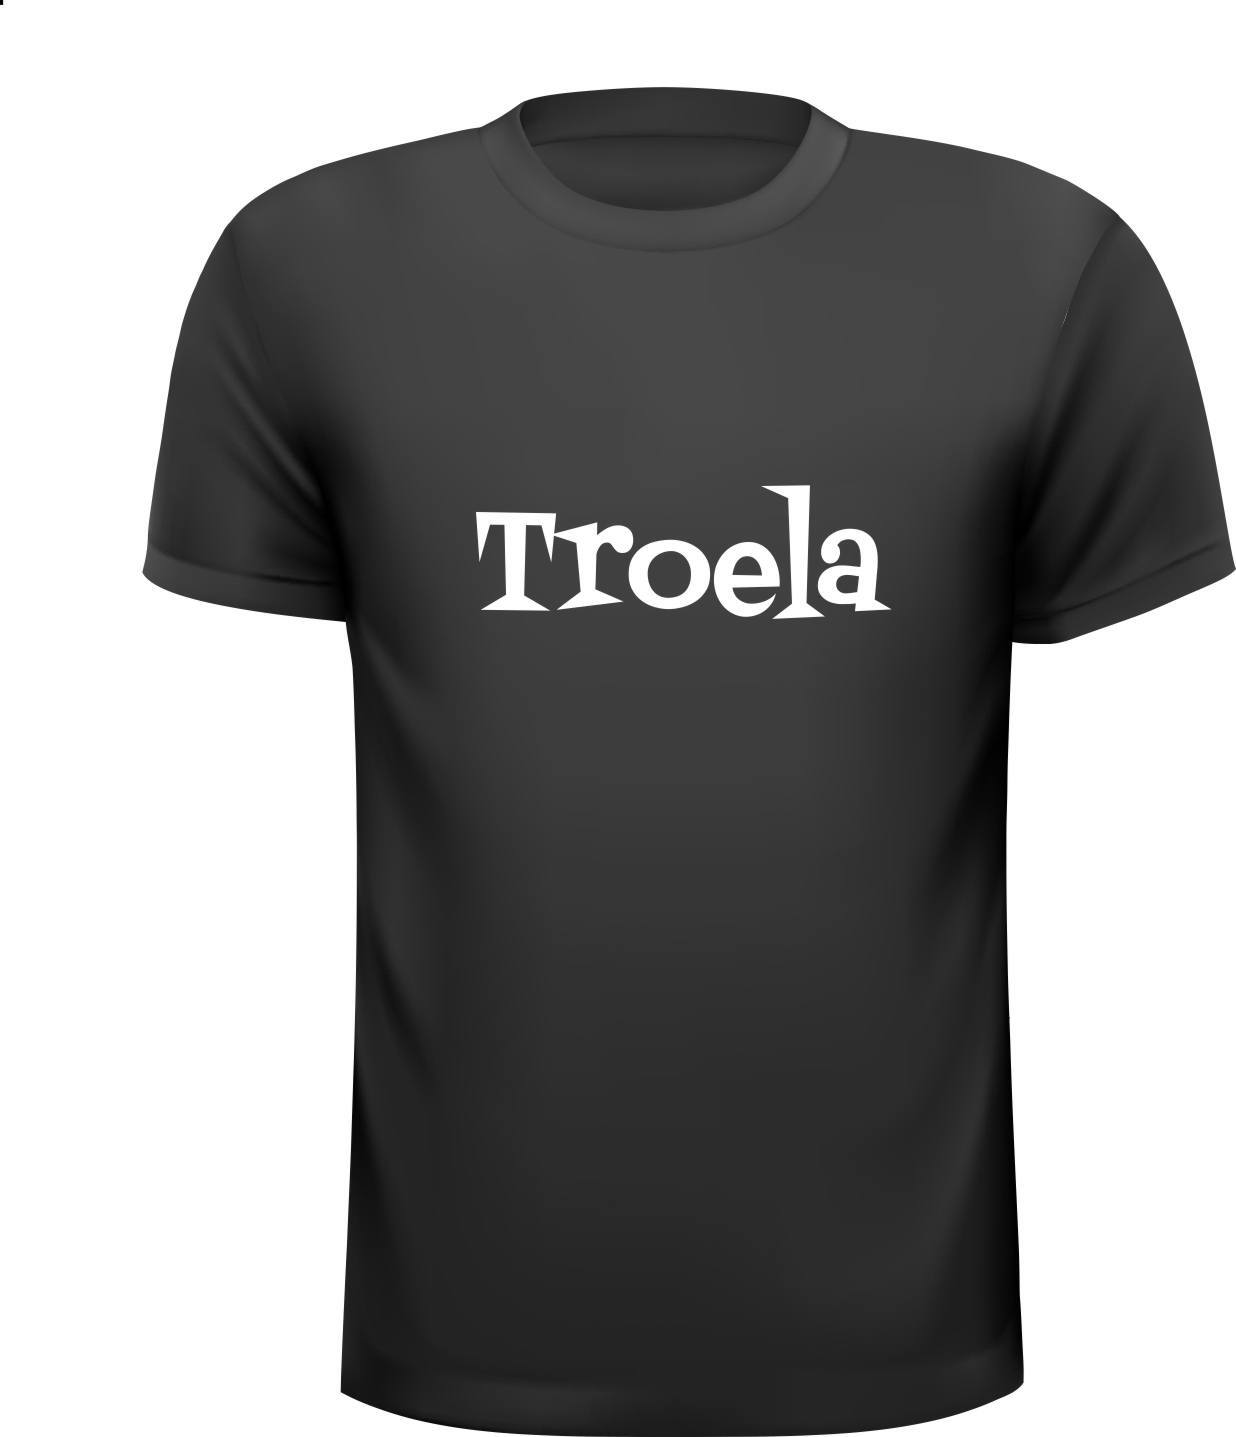 Troela T-shirt